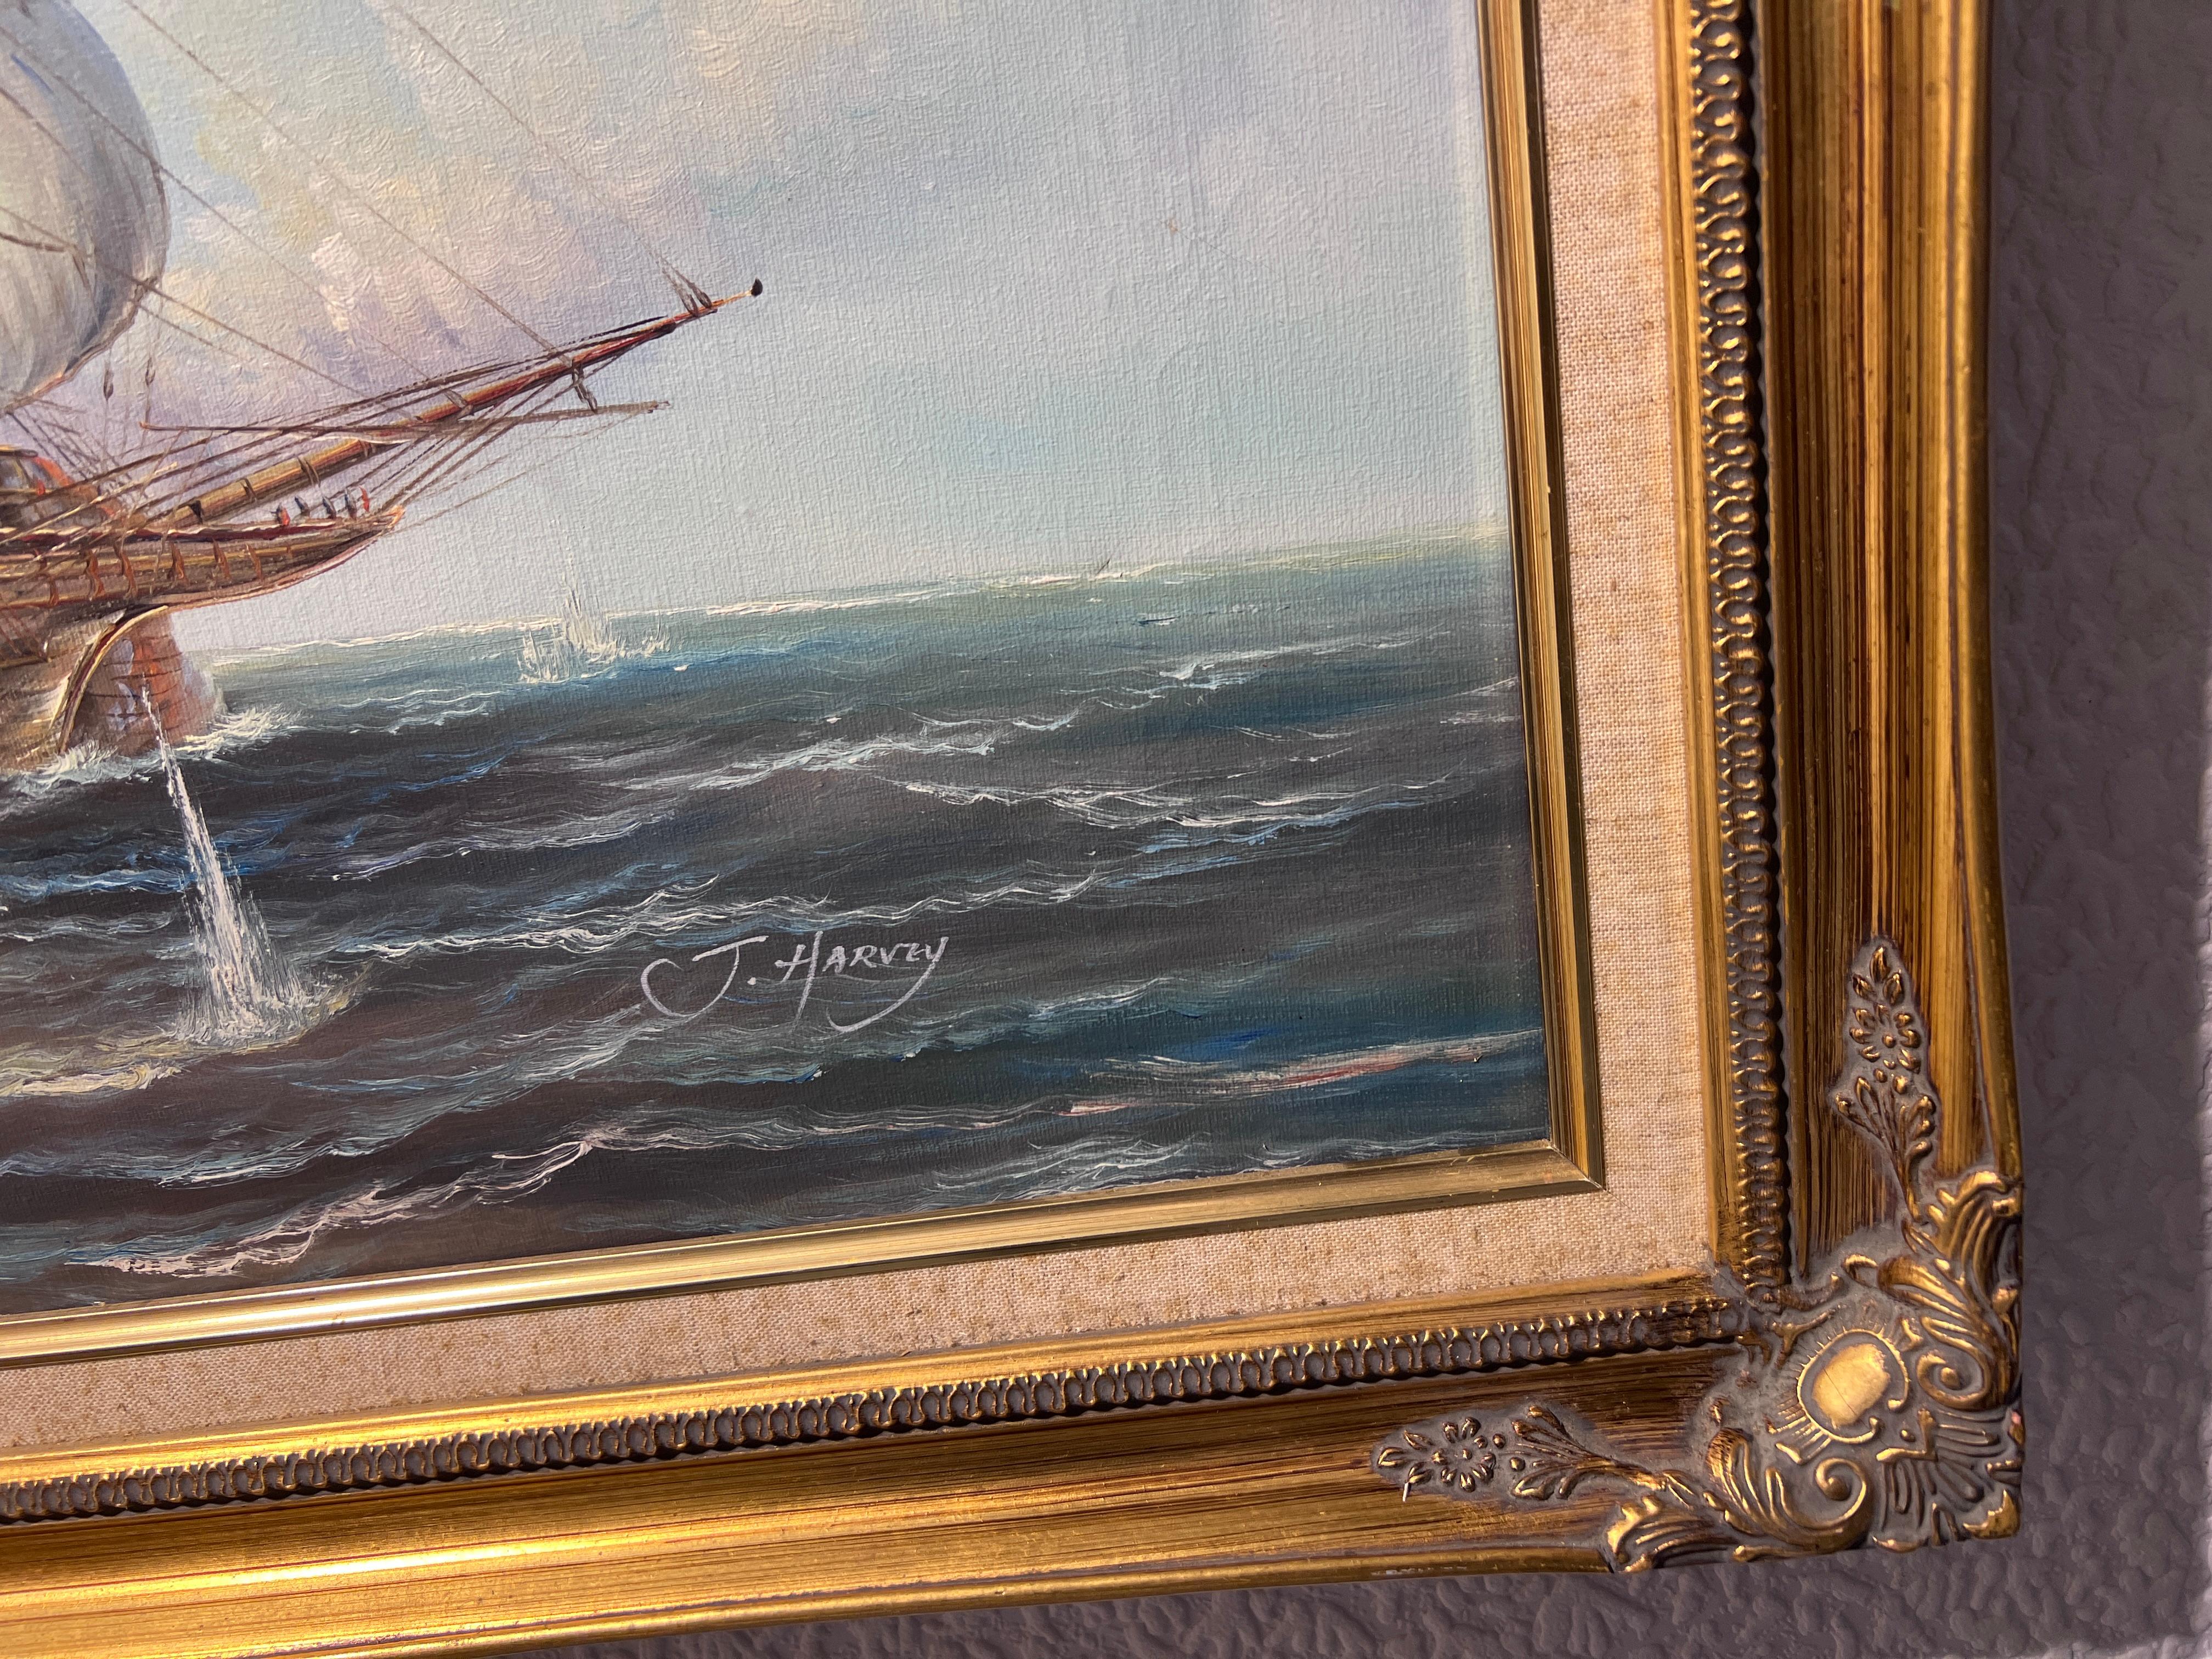 J.Harvey Large Oil painting on canvas, SHIPS BATTLE AT SEA, Signed, Framed For Sale 3